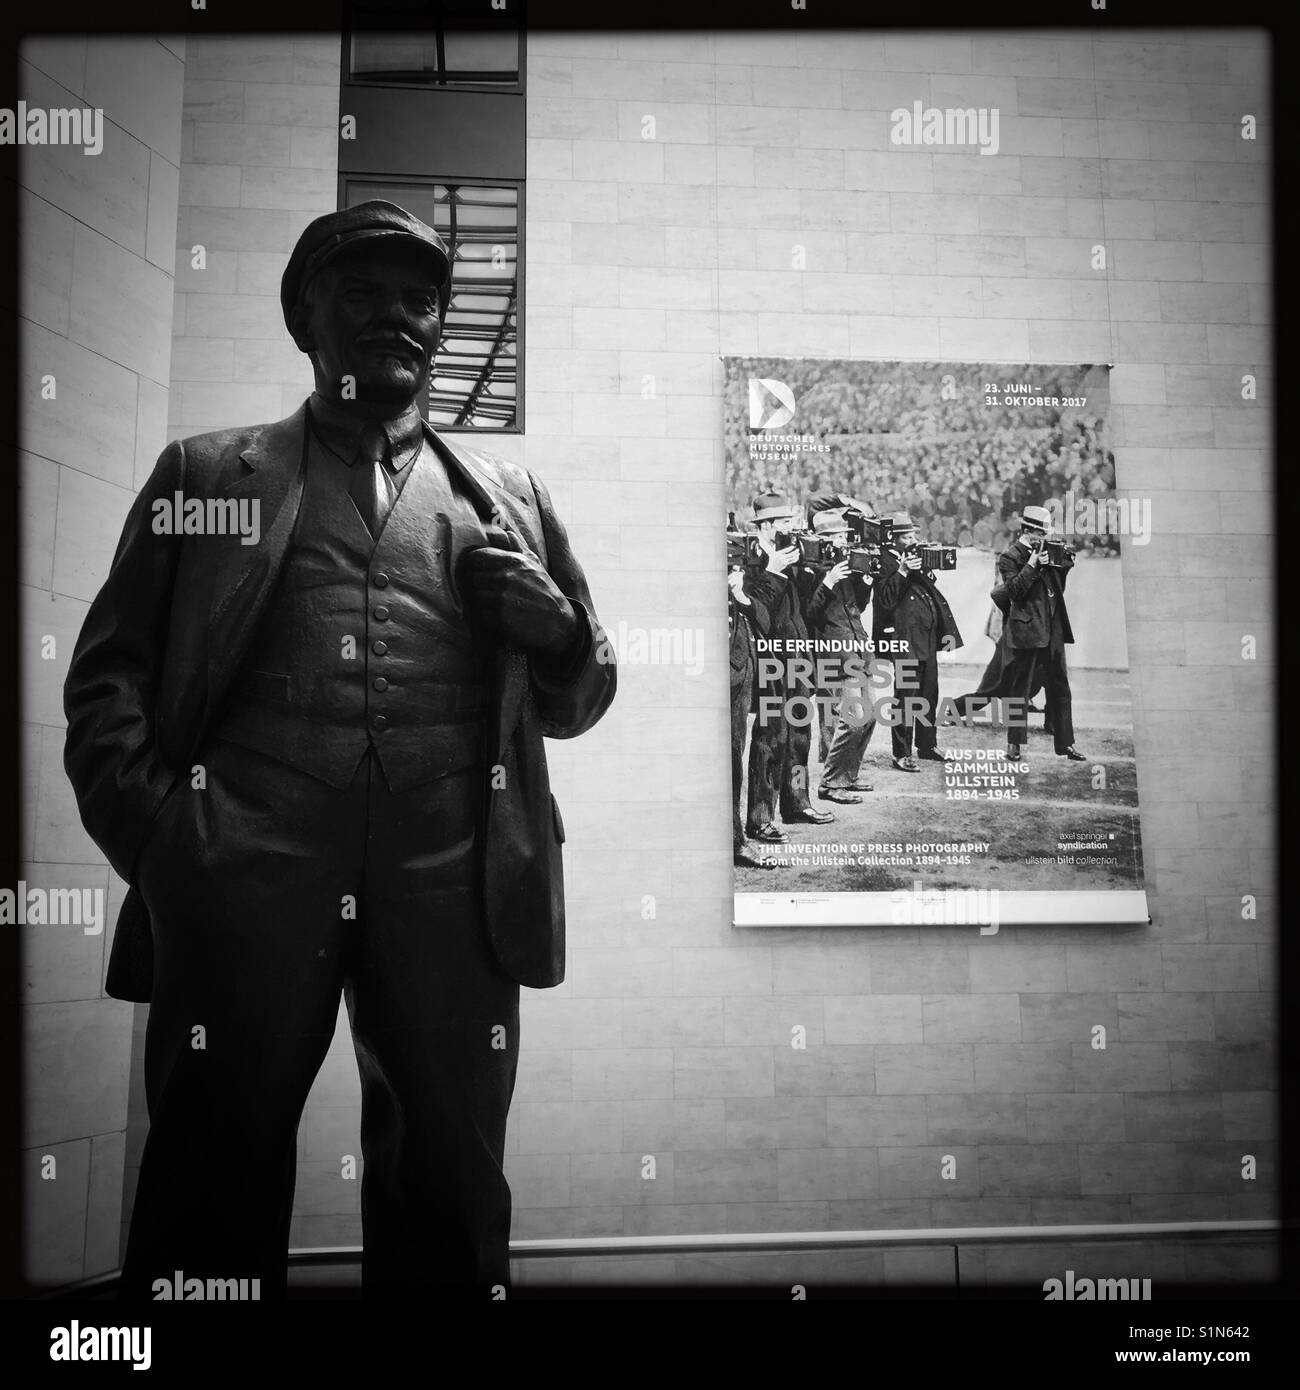 Lenin statue in Deutsche Historiche Museum in Berlin with Press photography poster in background Stock Photo